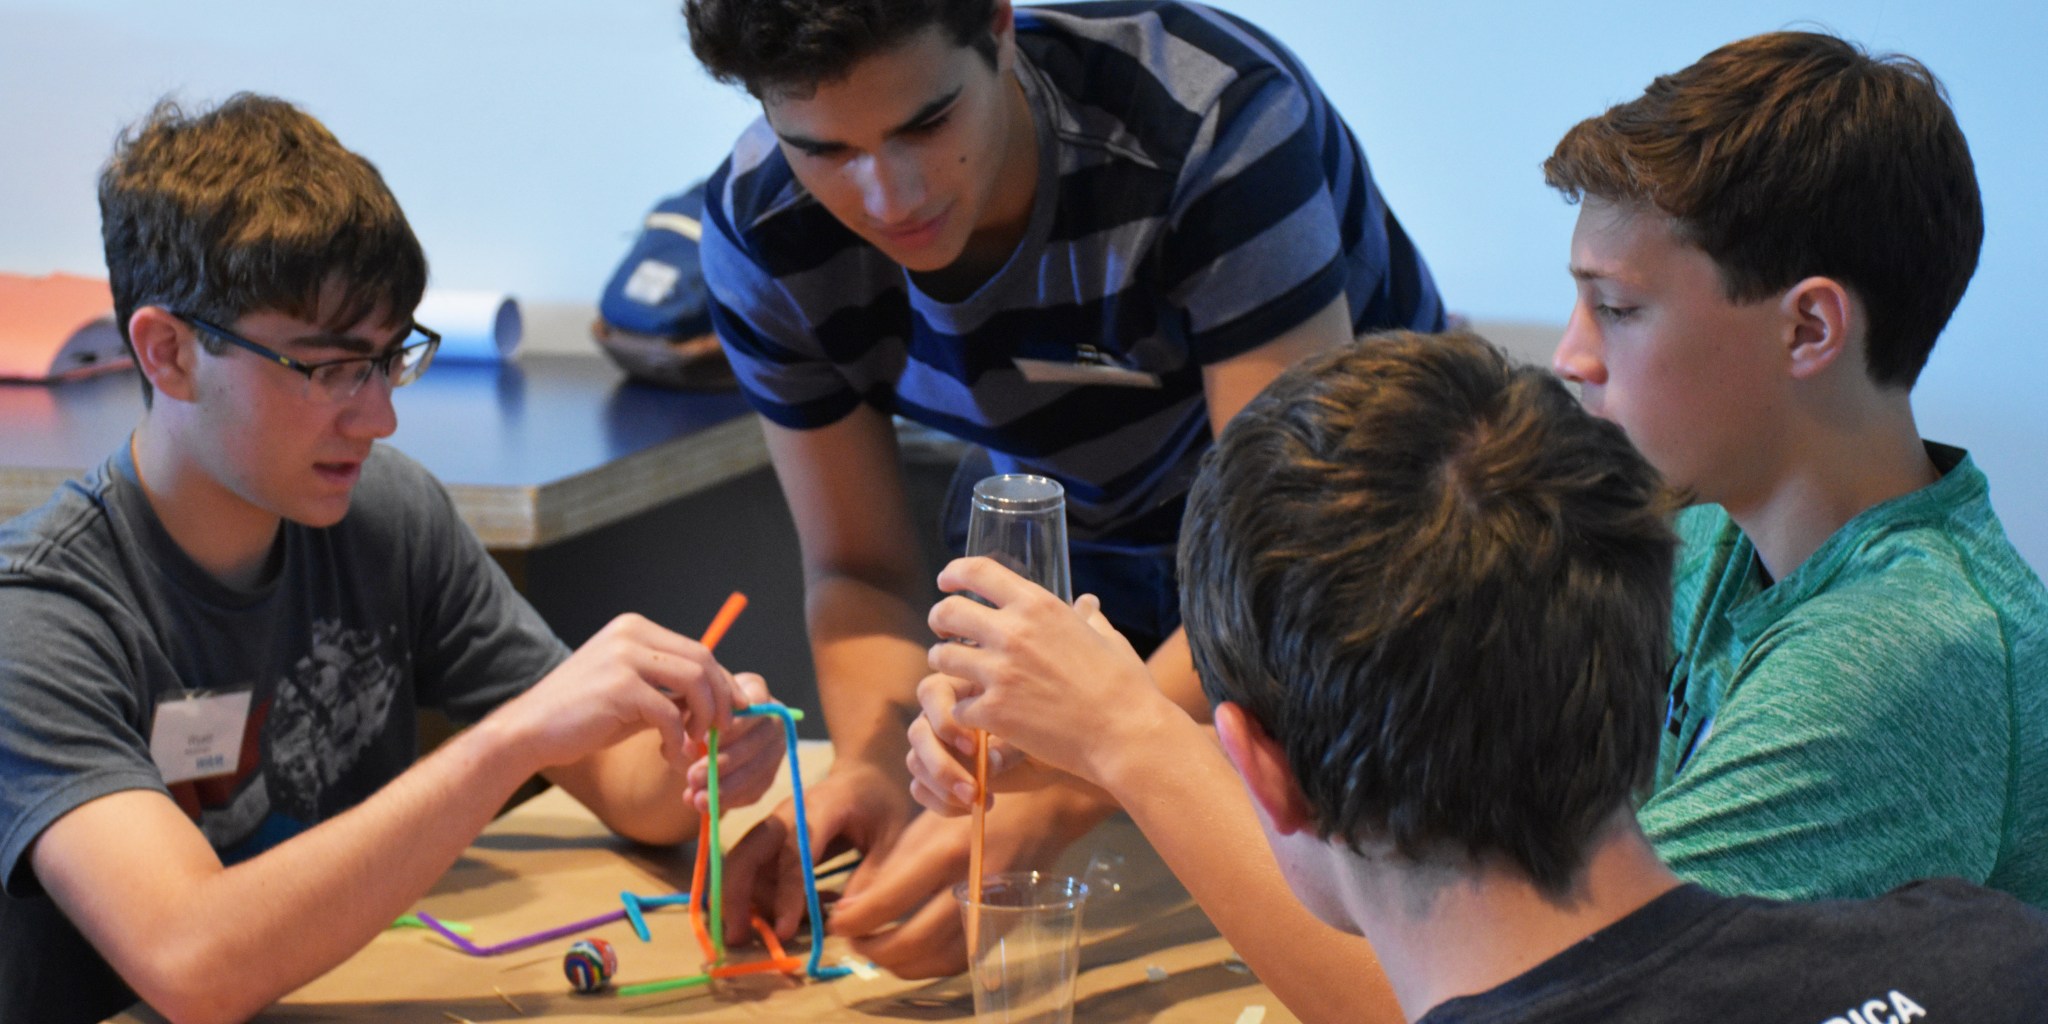 mentor helping students build plastic models on a desk